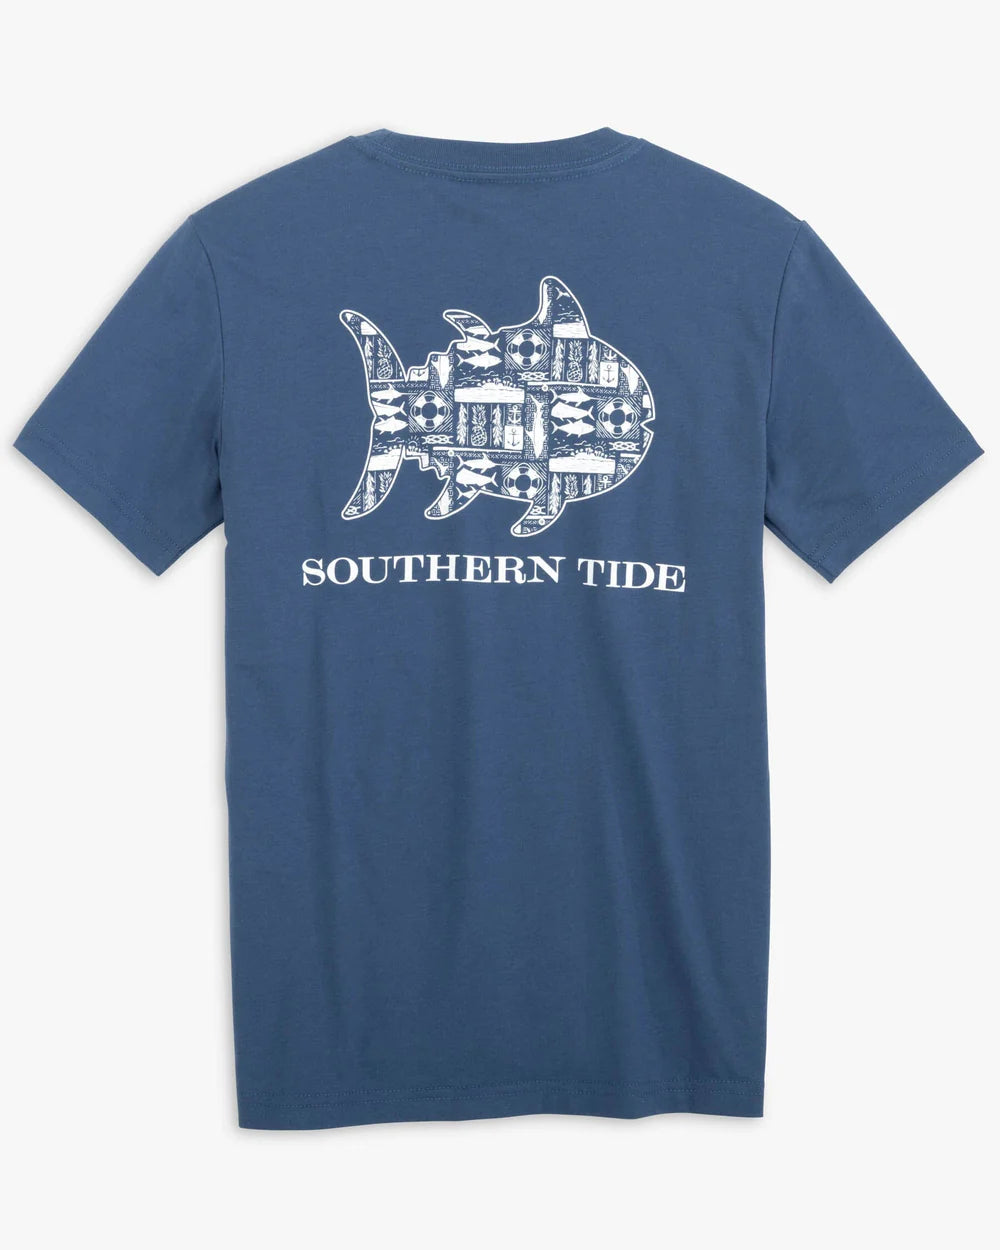 Southern Tide All Inclusive Sj Tee